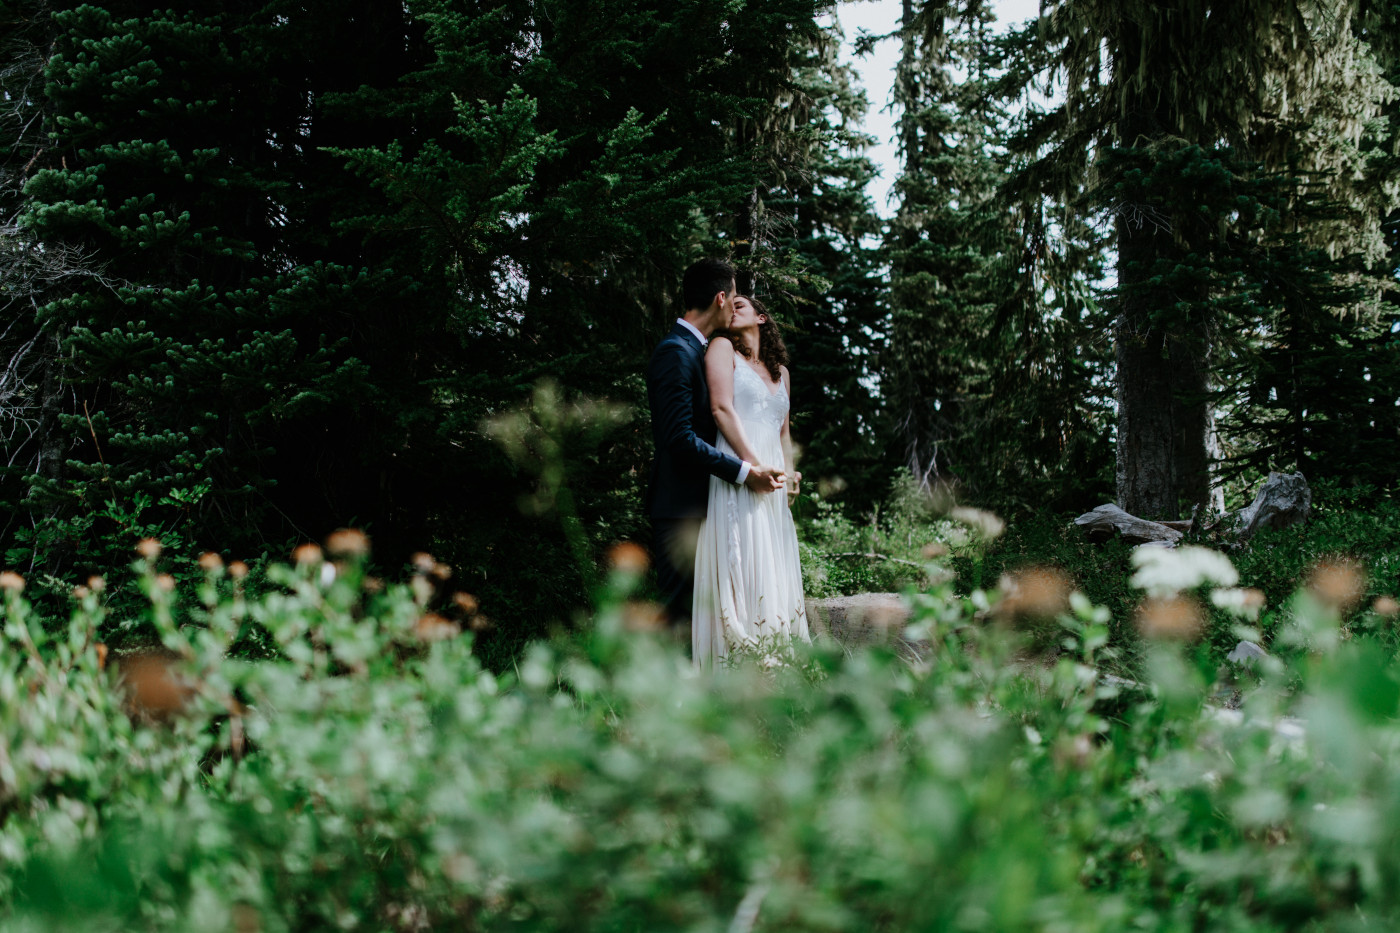 Tasha and Chad kiss. Elopement photography at Mount Rainier by Sienna Plus Josh.